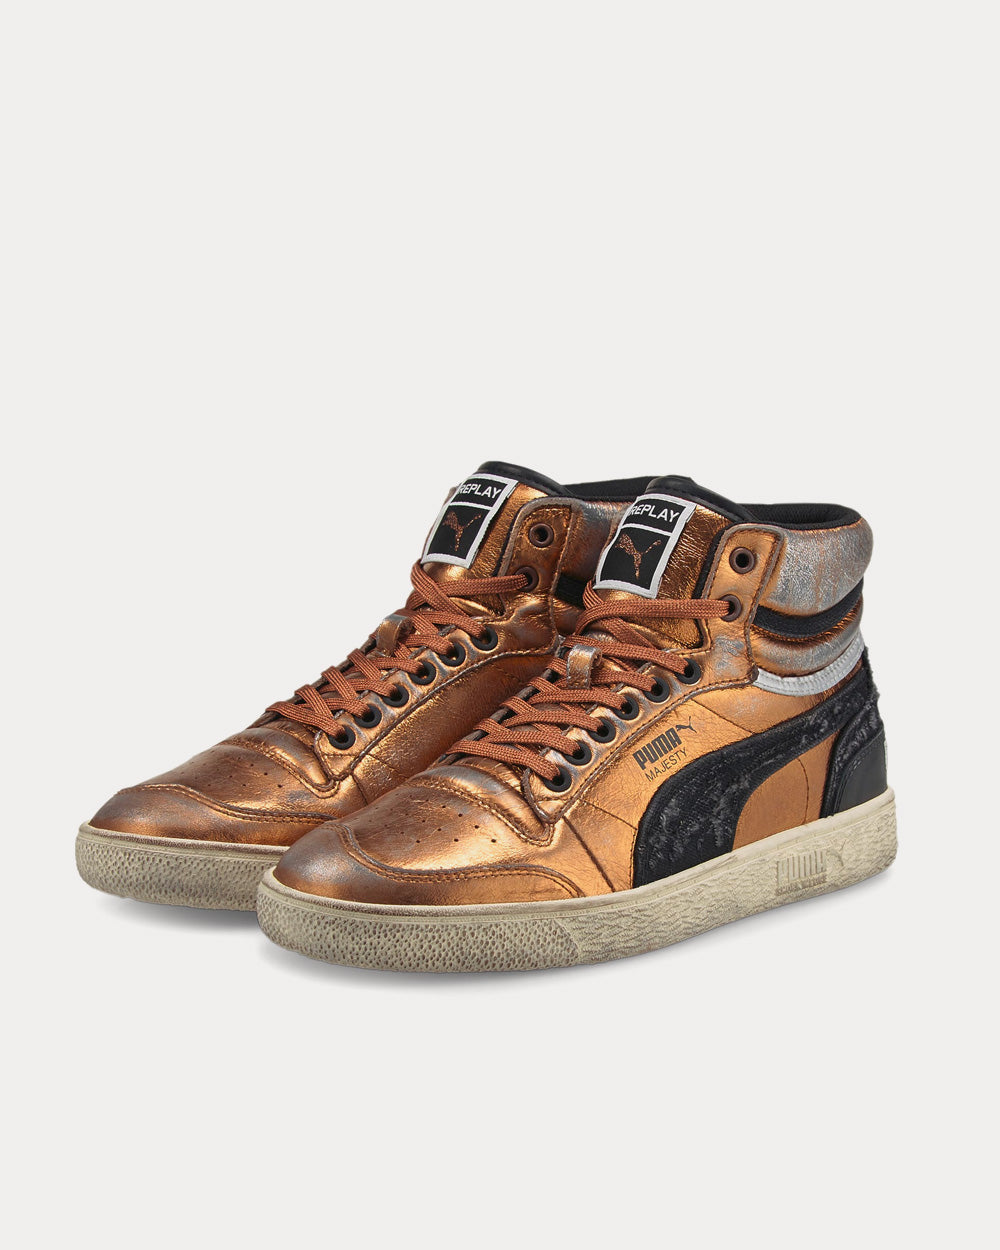 Puma - Ralph Sampson Mid Metallic G Copper / Black High Top Sneakers